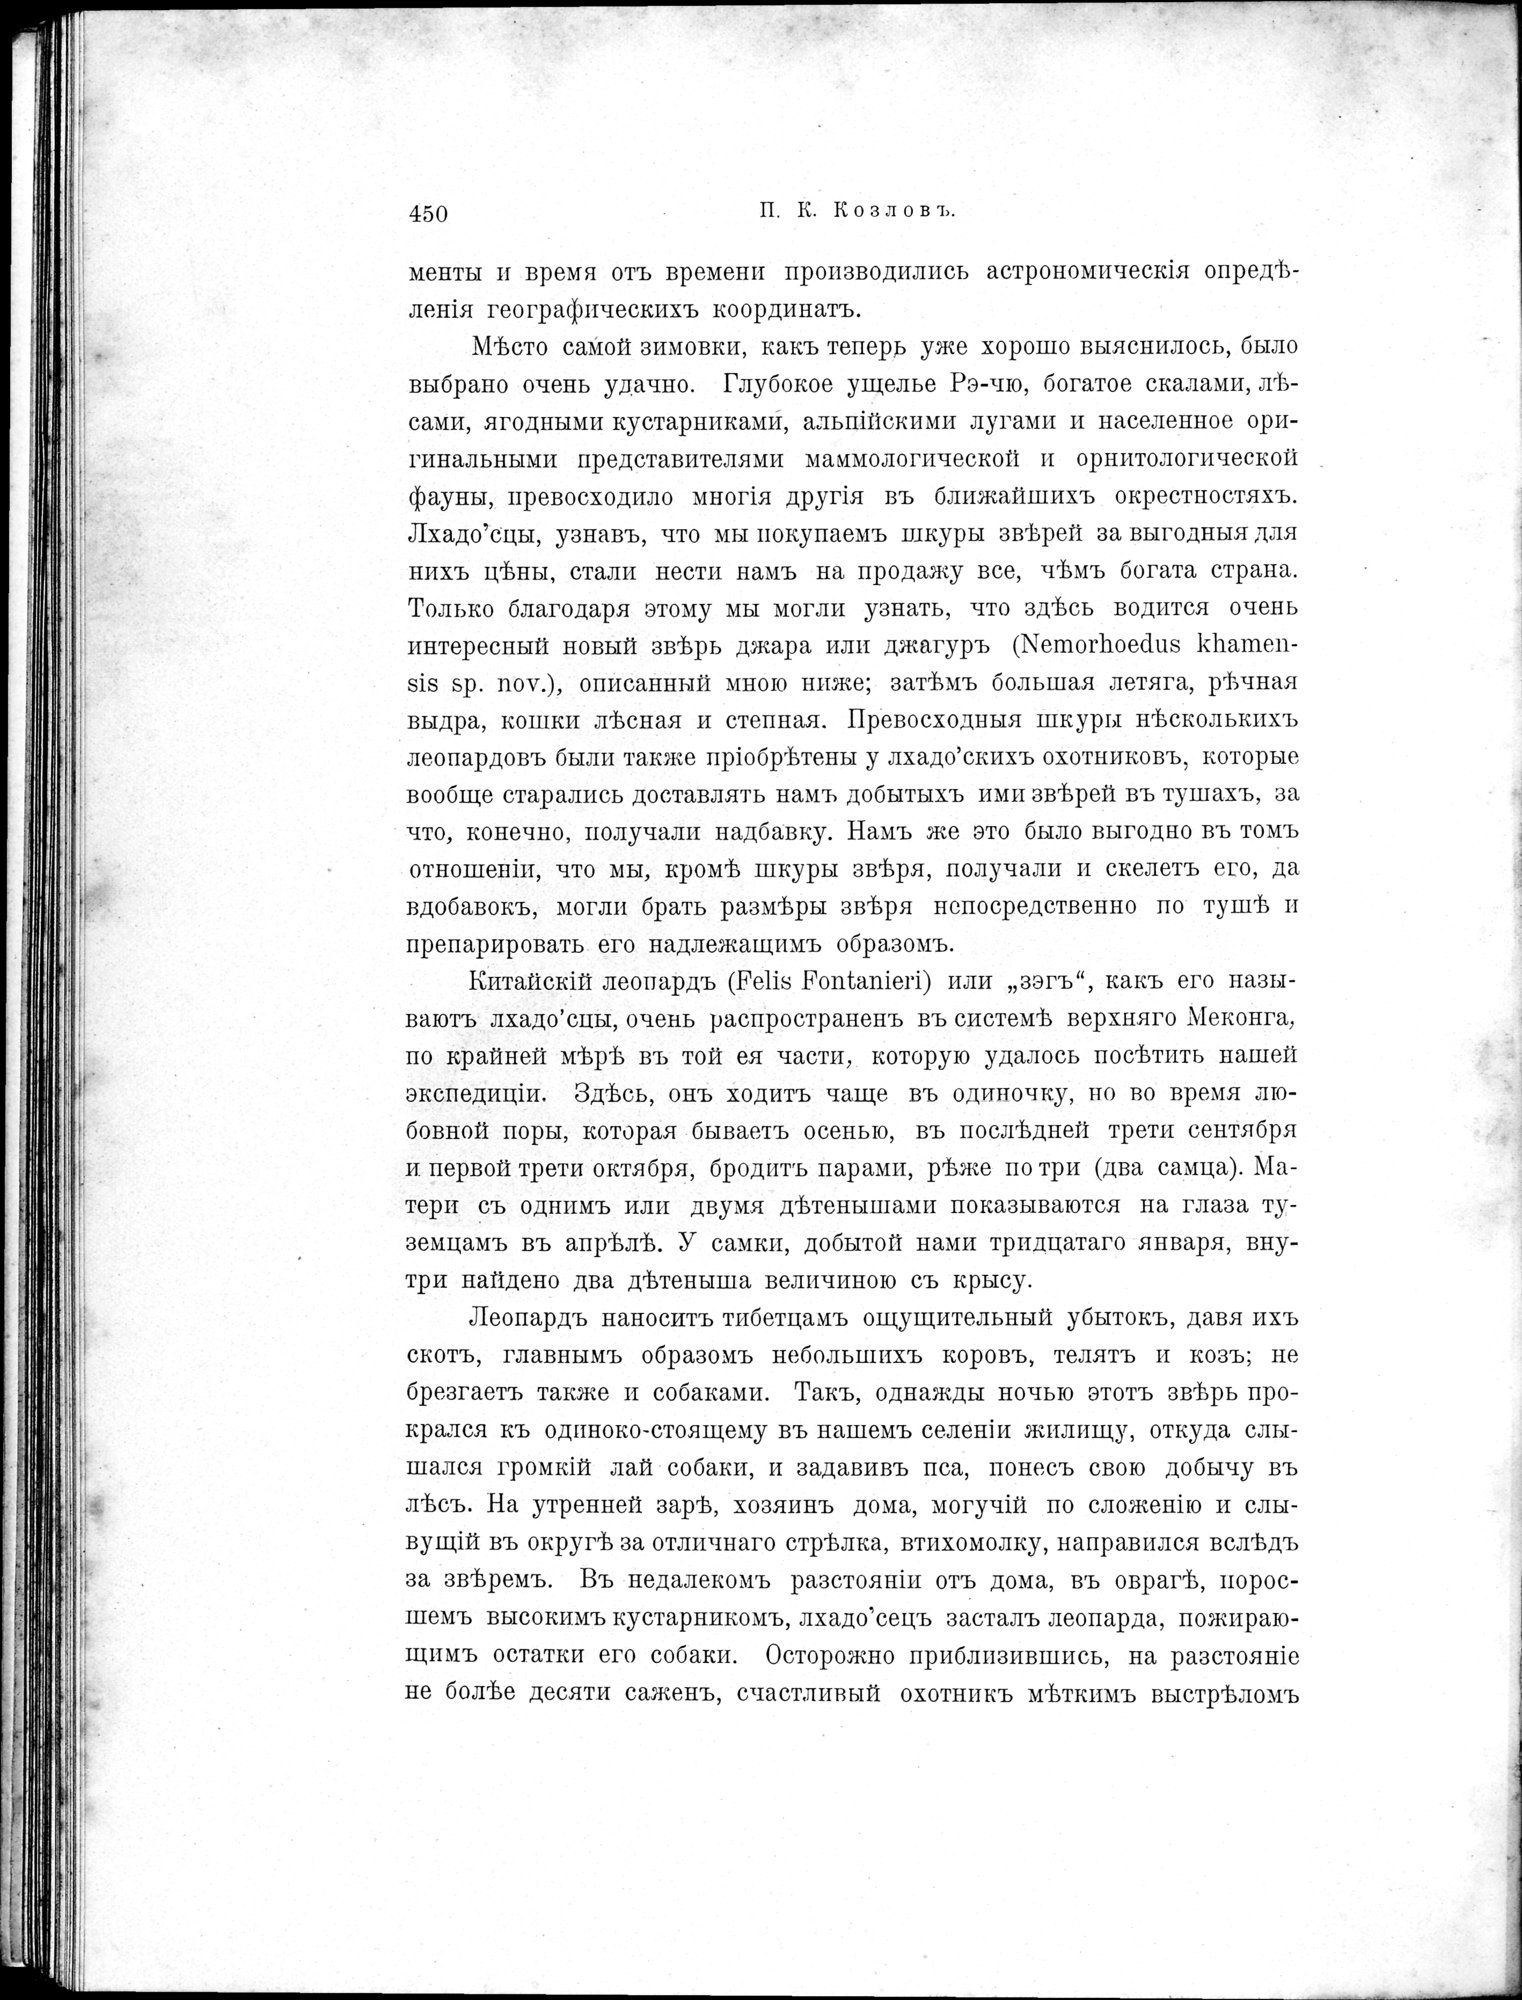 Mongoliia i Kam : vol.2 / Page 250 (Grayscale High Resolution Image)